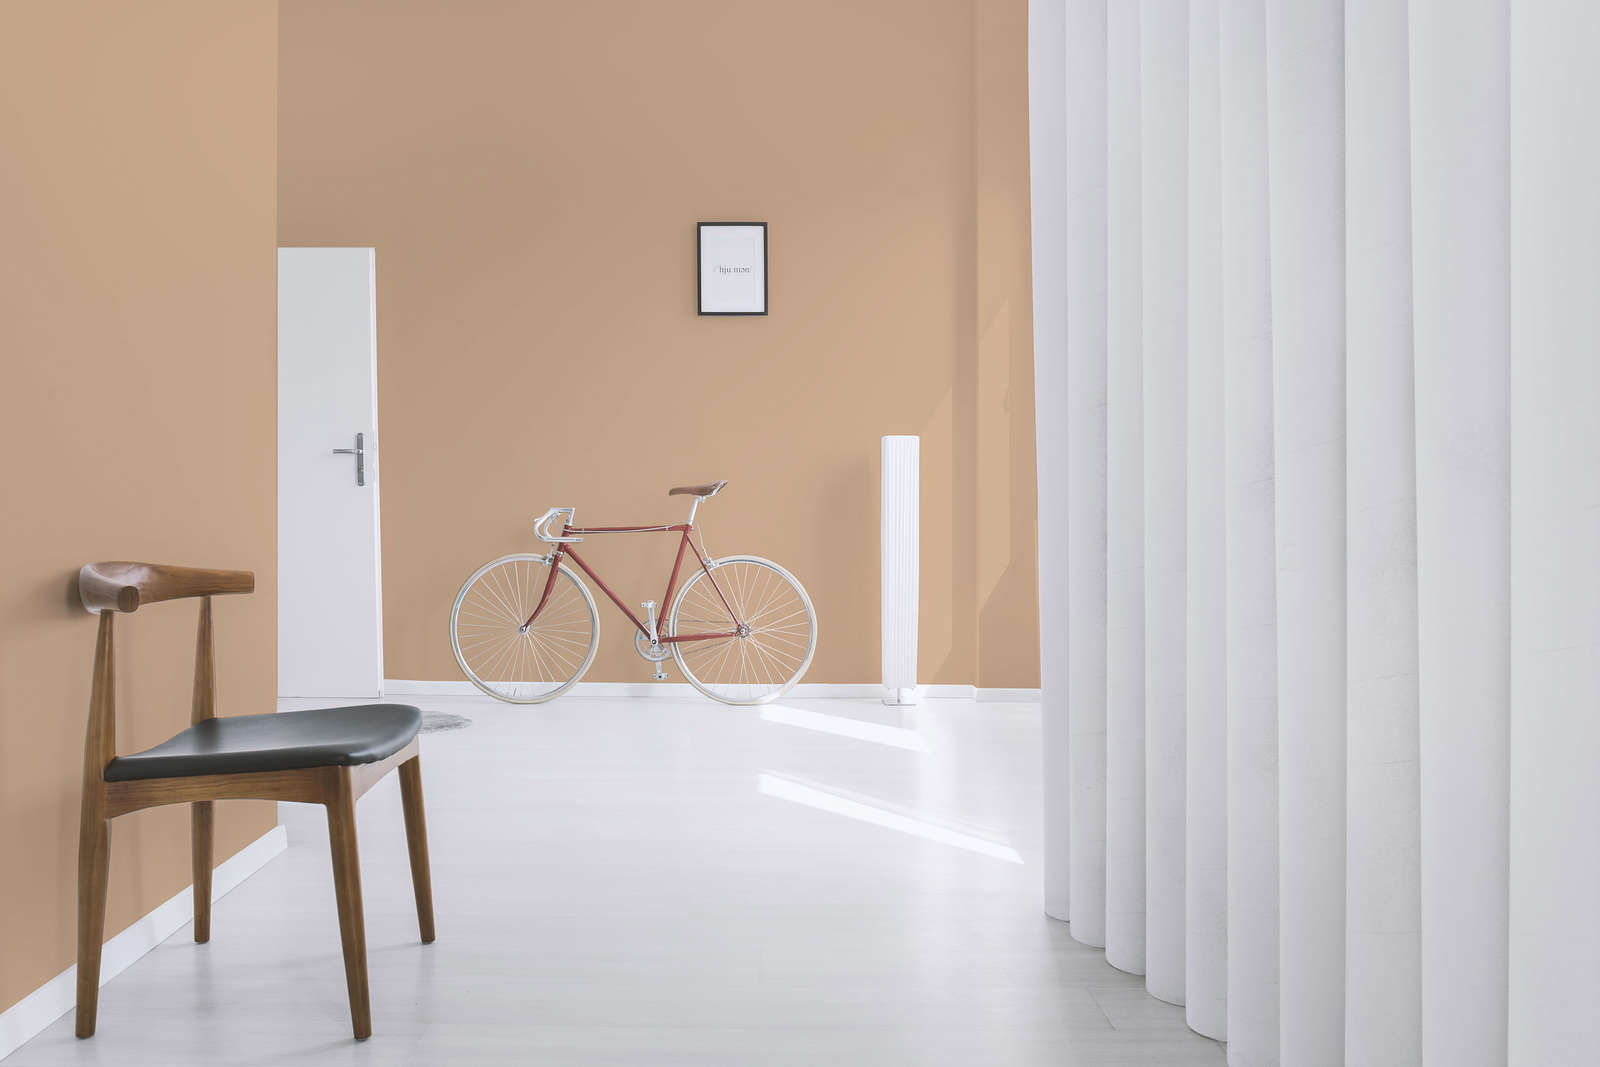             Premium Wall Paint cheerful light beige »Boho Beige« NW727 – 1 litre
        